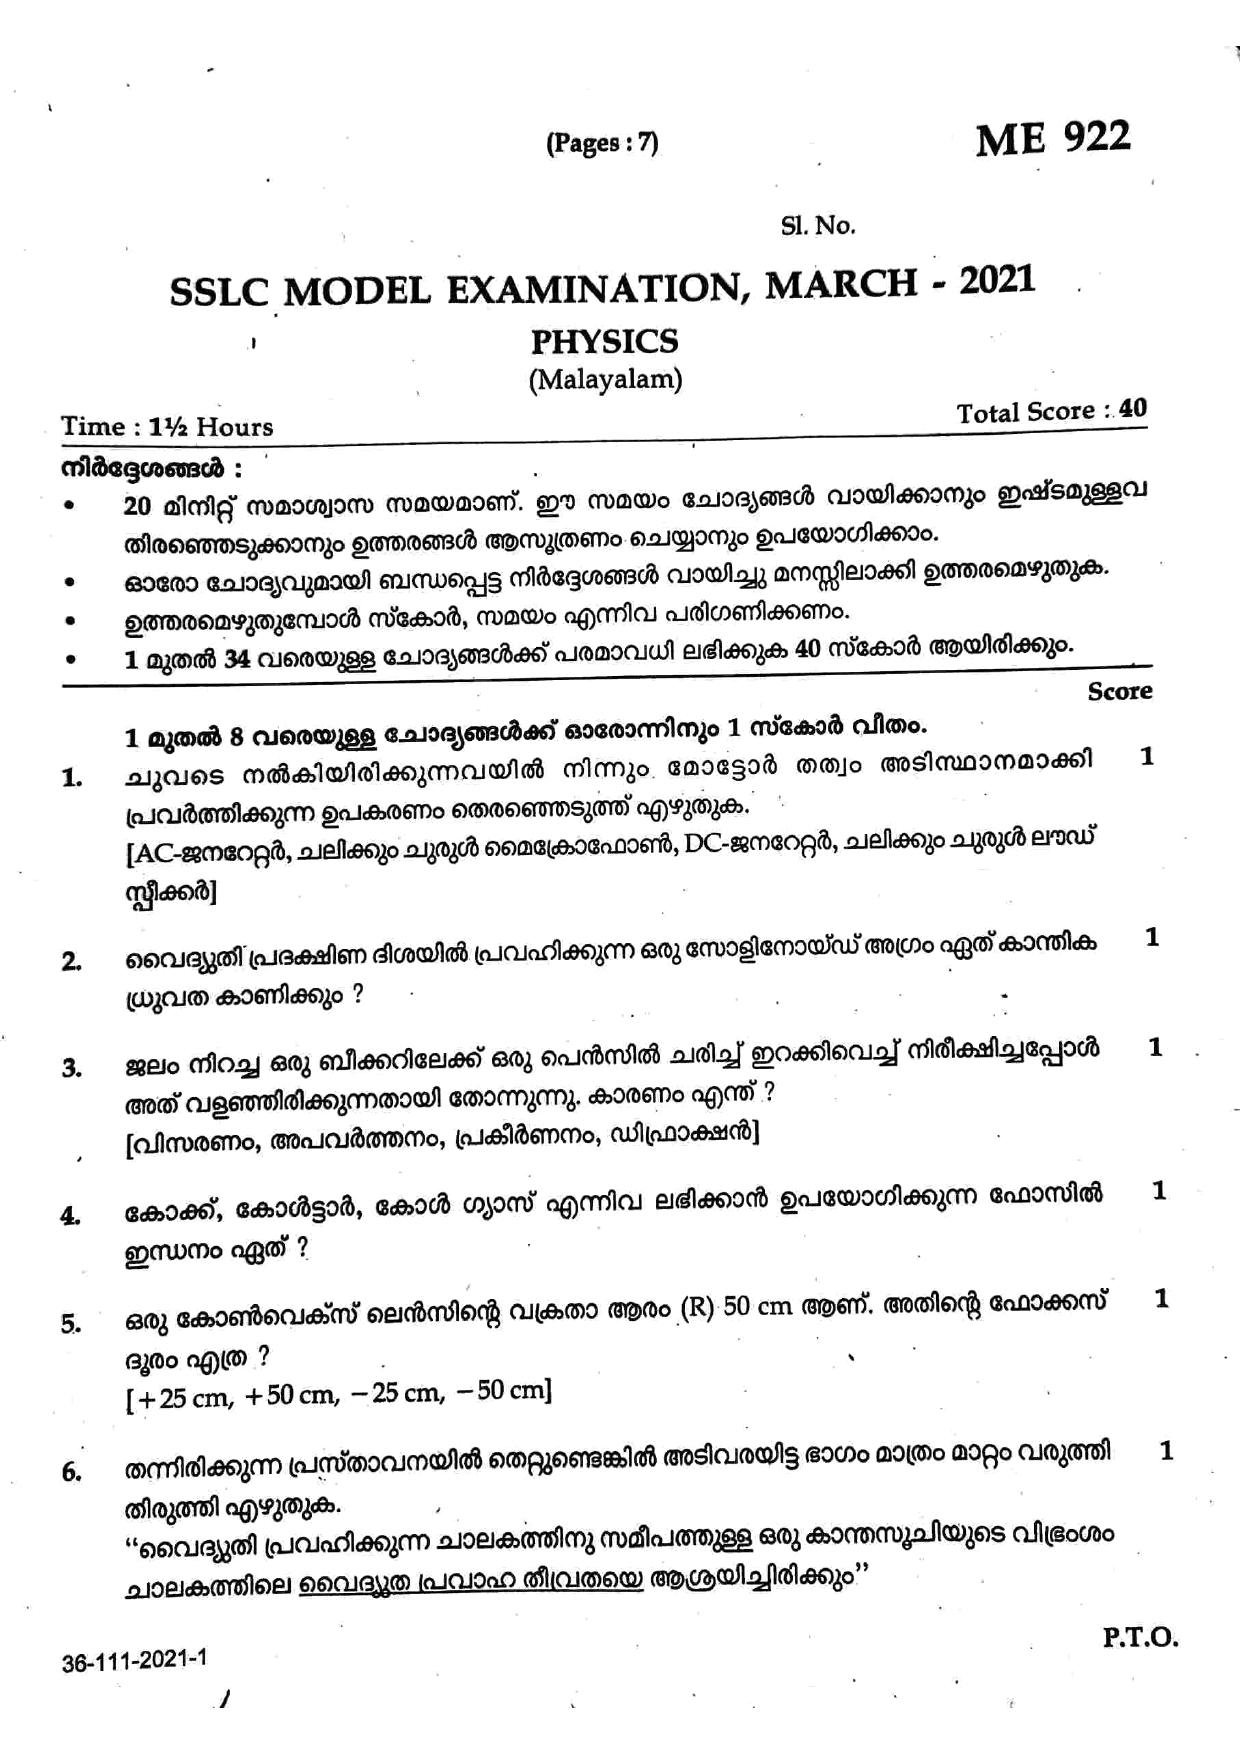 Kerala SSLC 2021 Physics (MM) Question Paper (Model) - Page 1